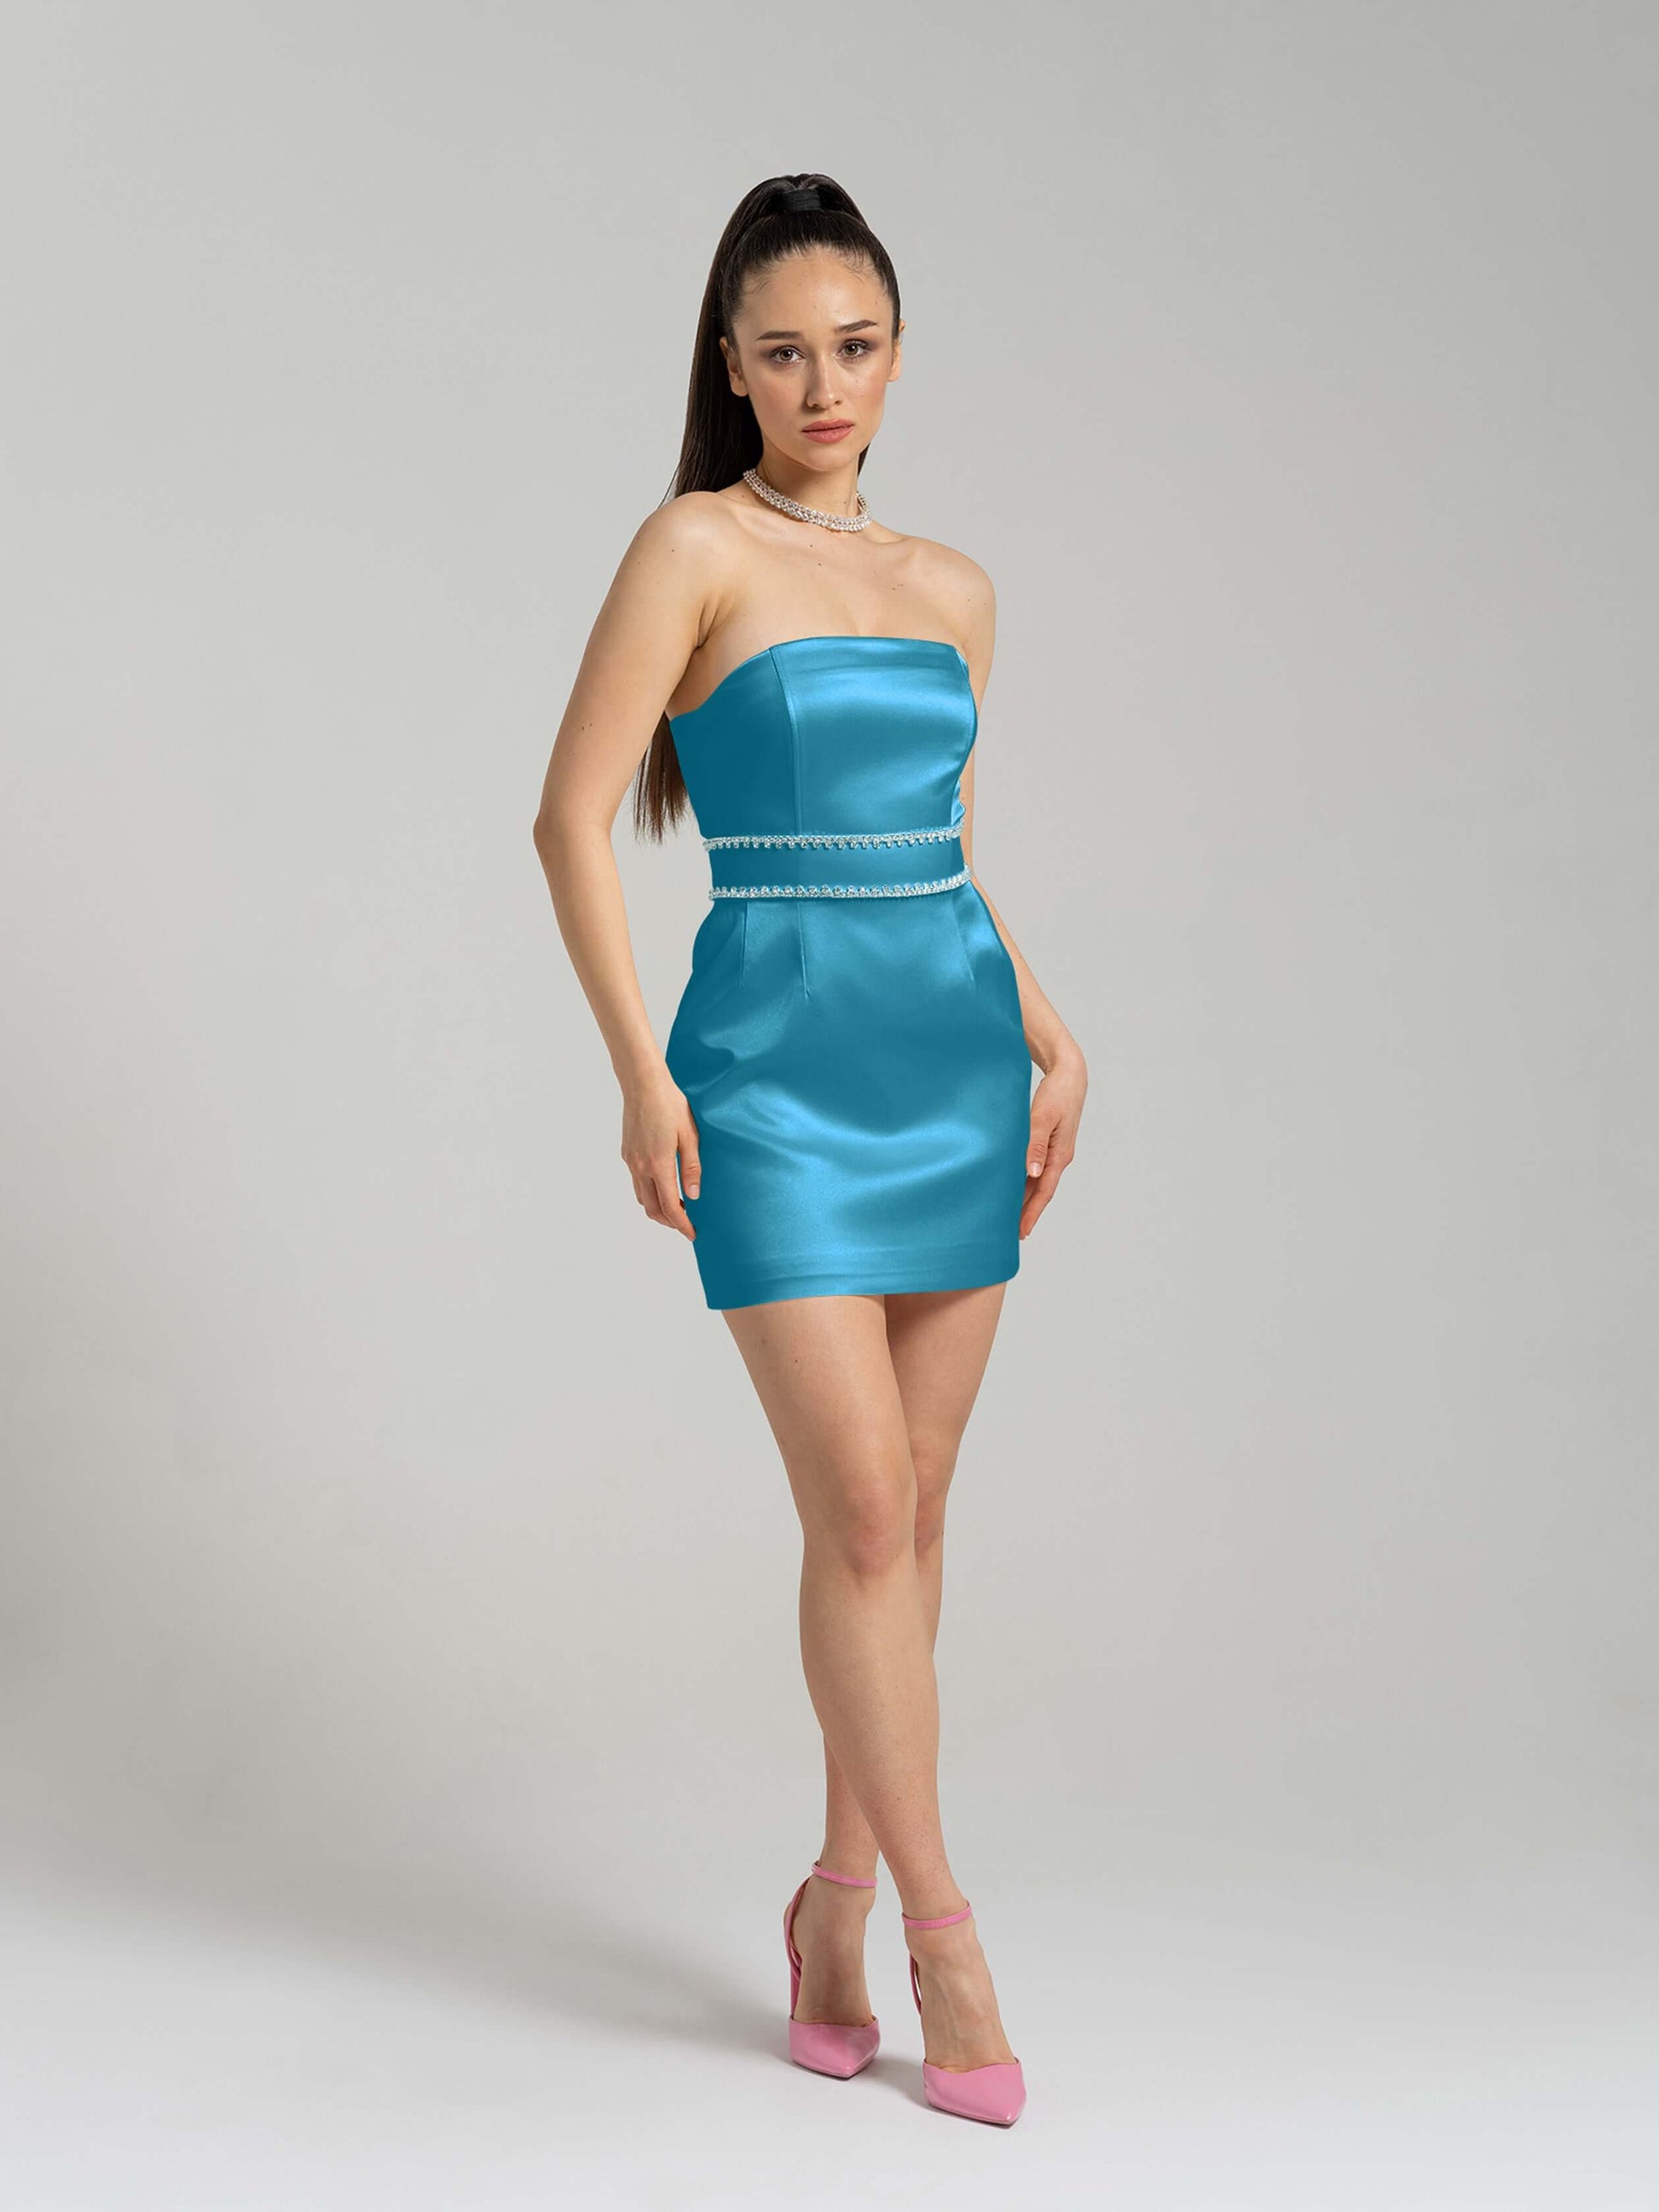 Elevated Excellence Mini Dress - Capri Blue by Tia Dorraine Women's Luxury Fashion Designer Clothing Brand